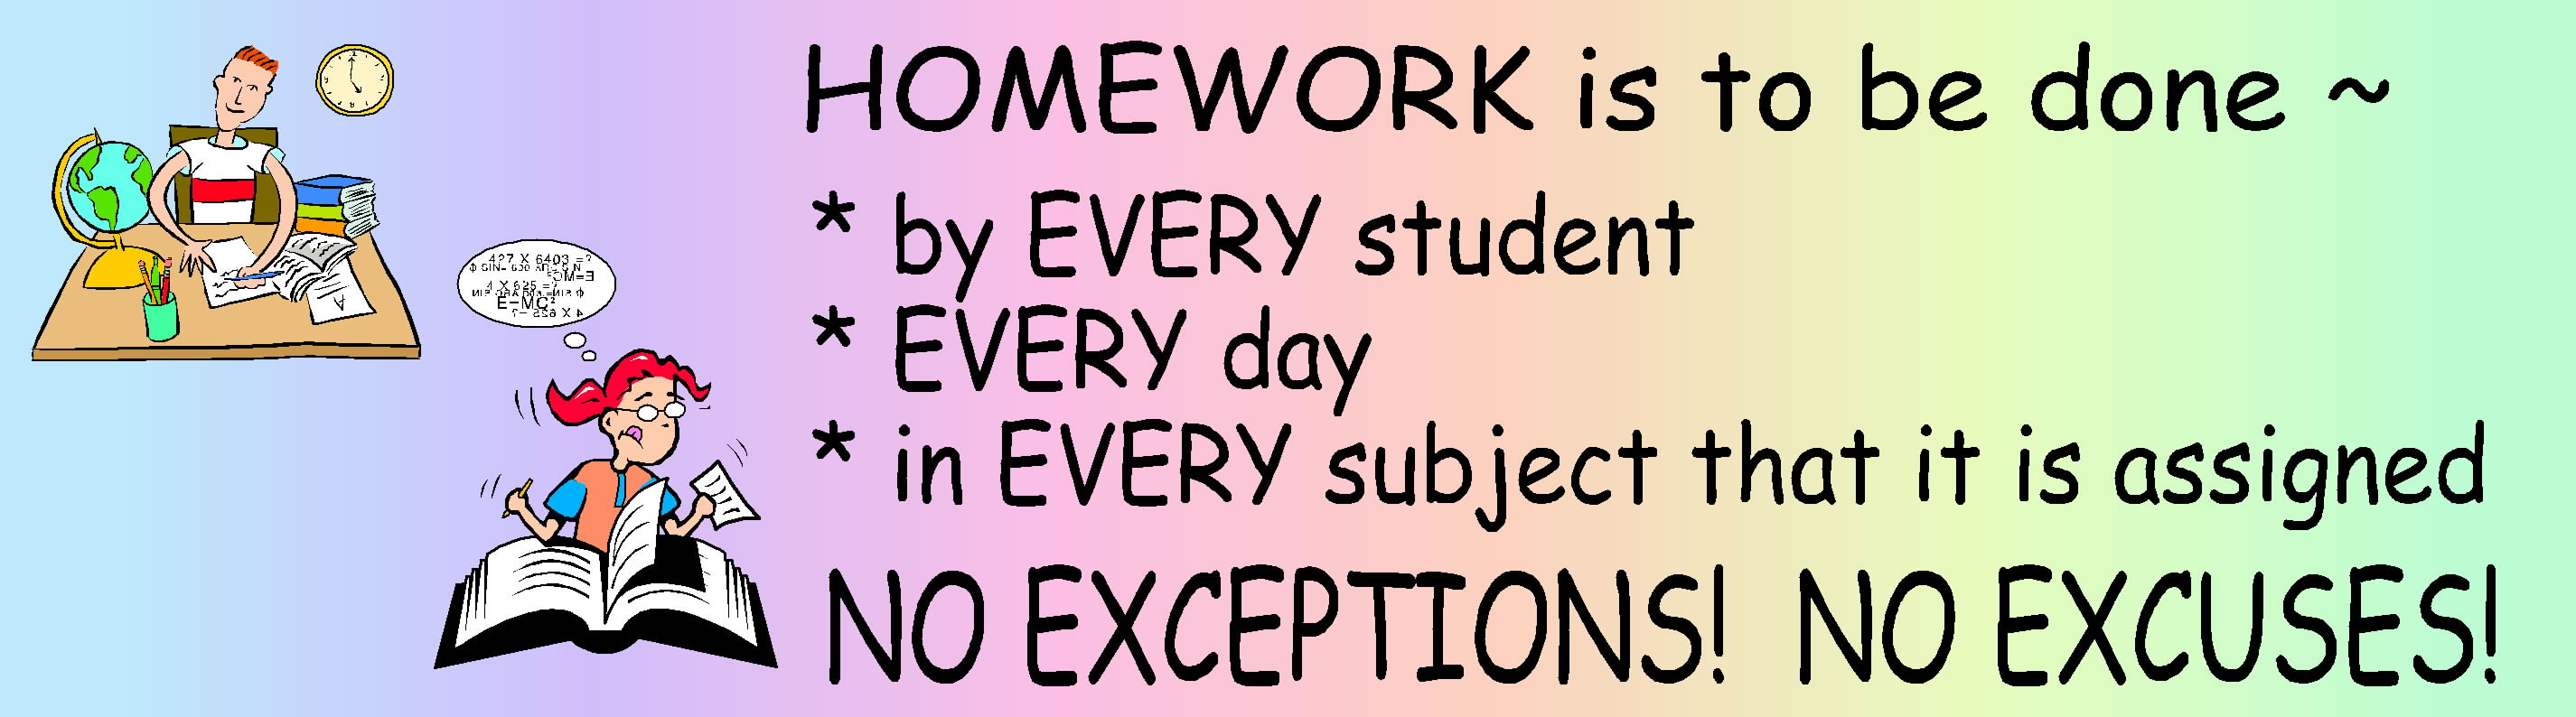 homework regulation 663 1